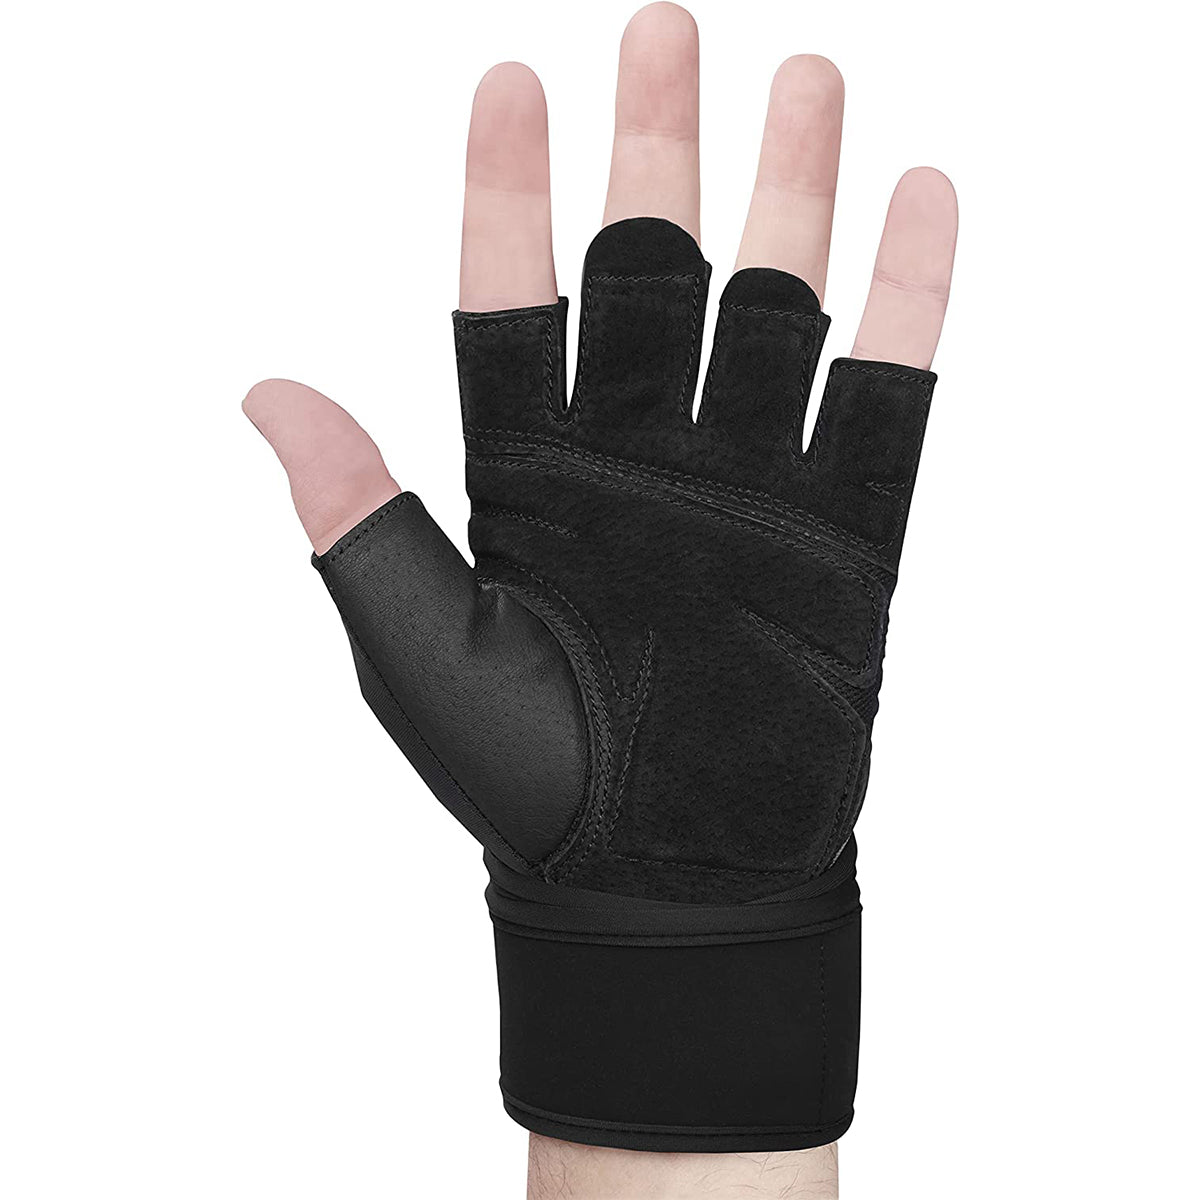 Harbinger Unisex Training Grip Wrist Wrap Weight Lifting Gloves - Black